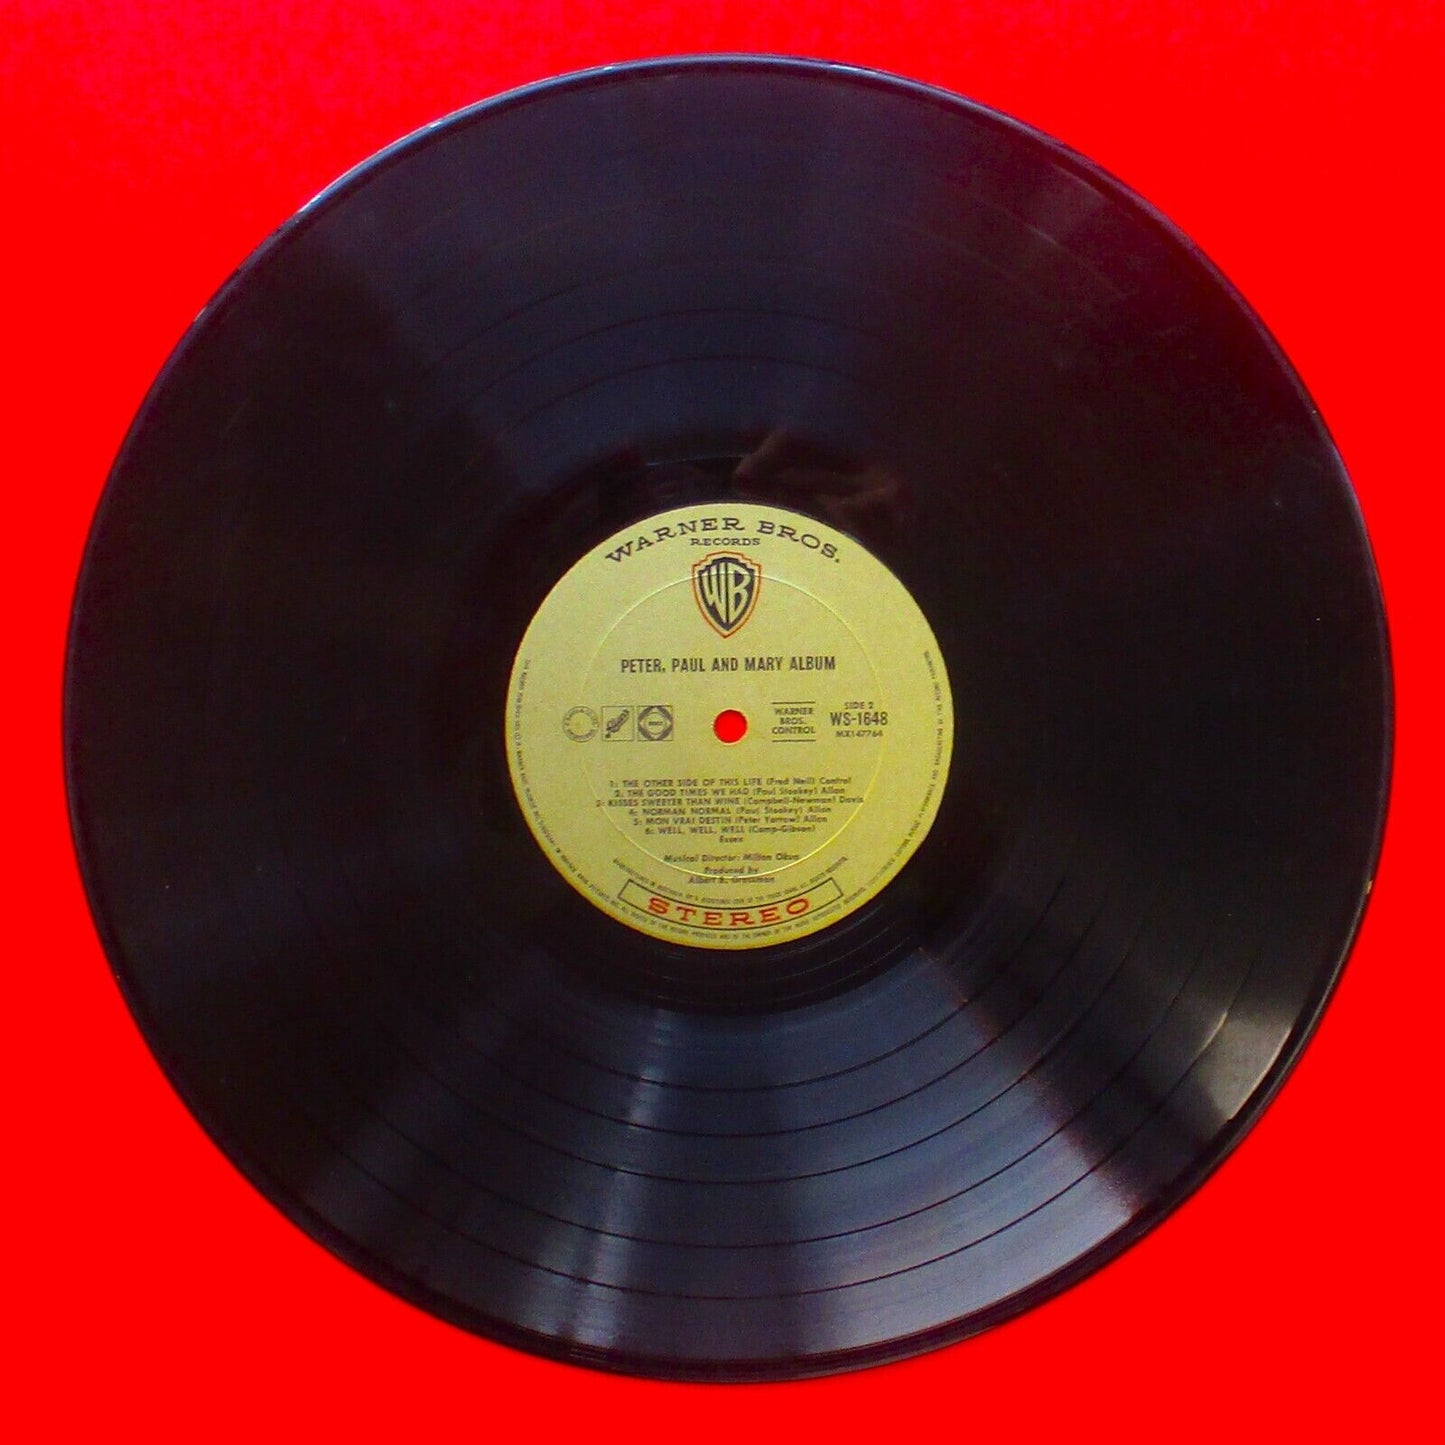 Peter, Paul And Mary Album Vinyl LP 1966 Gold Lable Australian Pressing